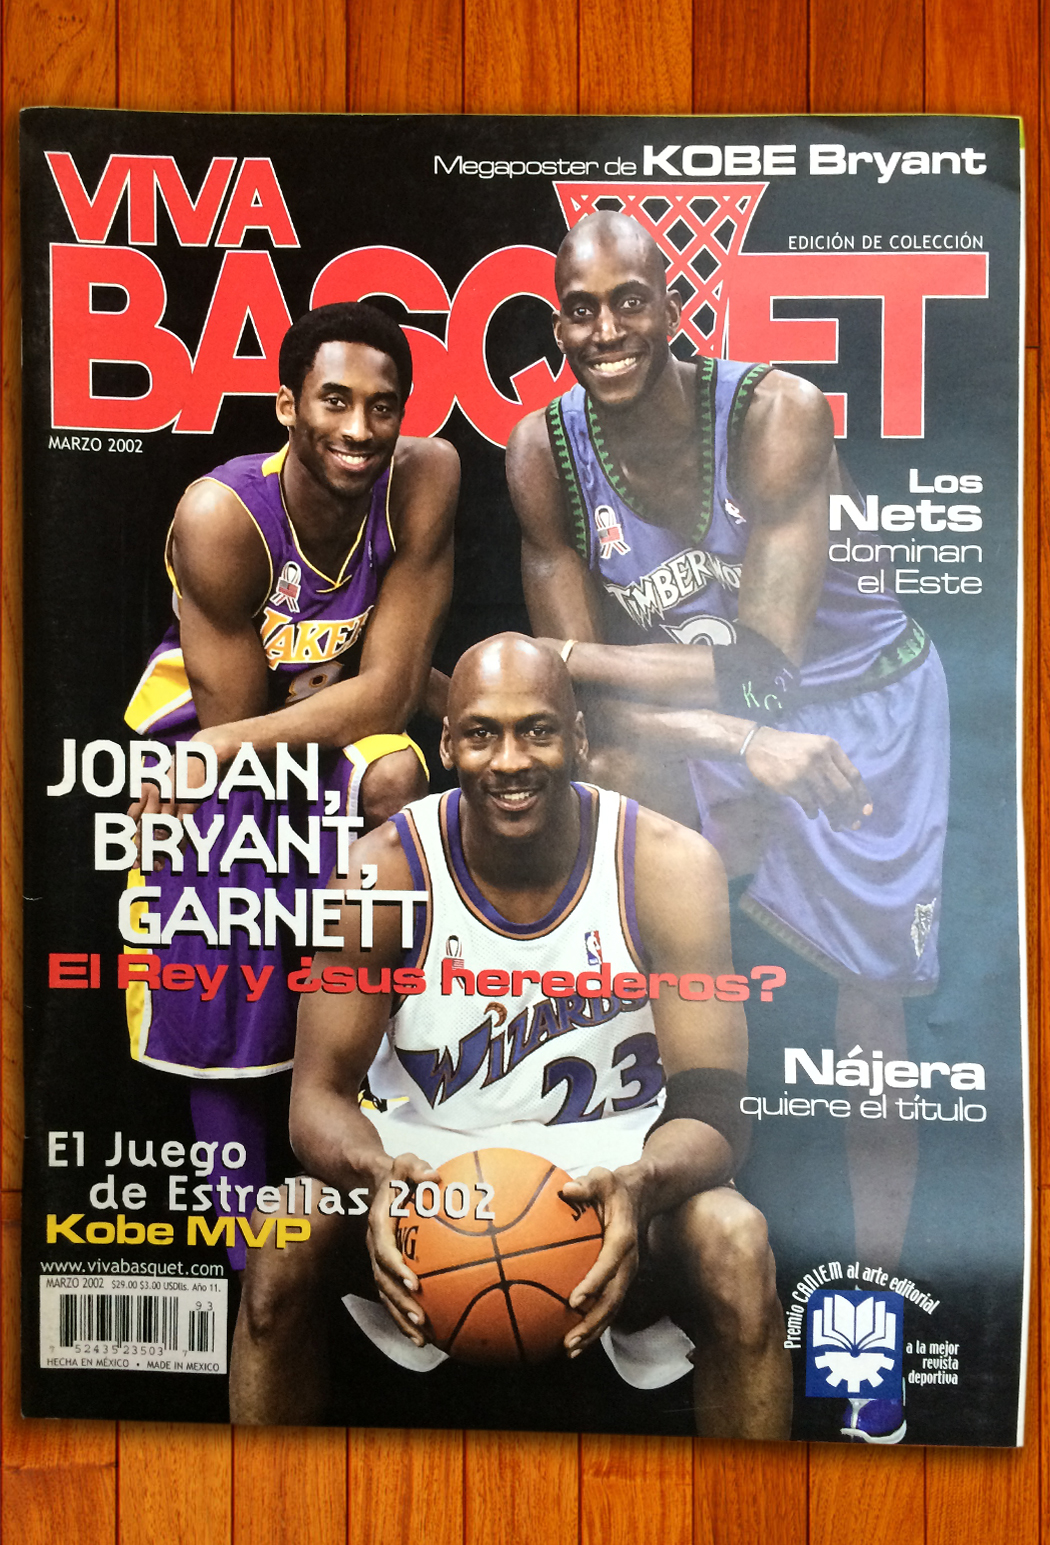 Kobe Bryant en viva basquet foto 11